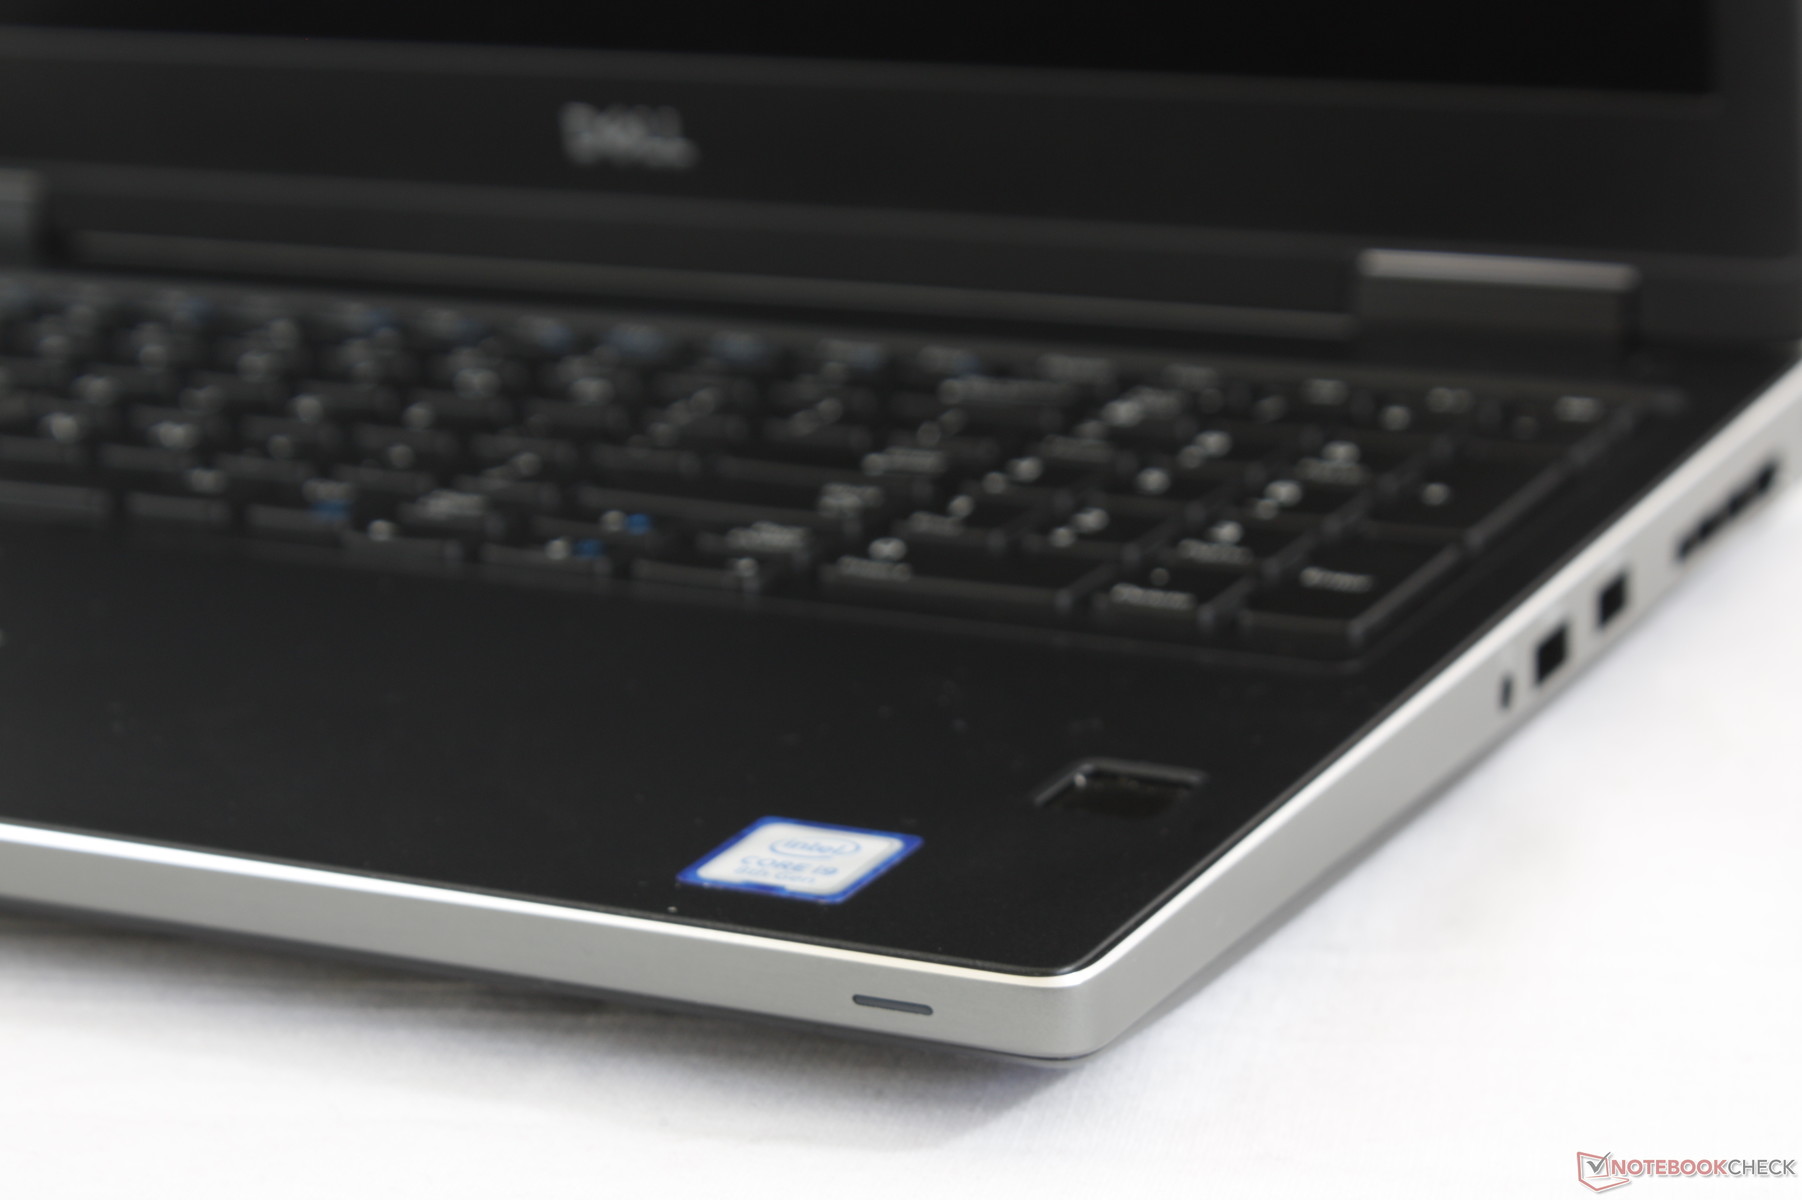 Laptop poleasingowy Dell Precision 7530